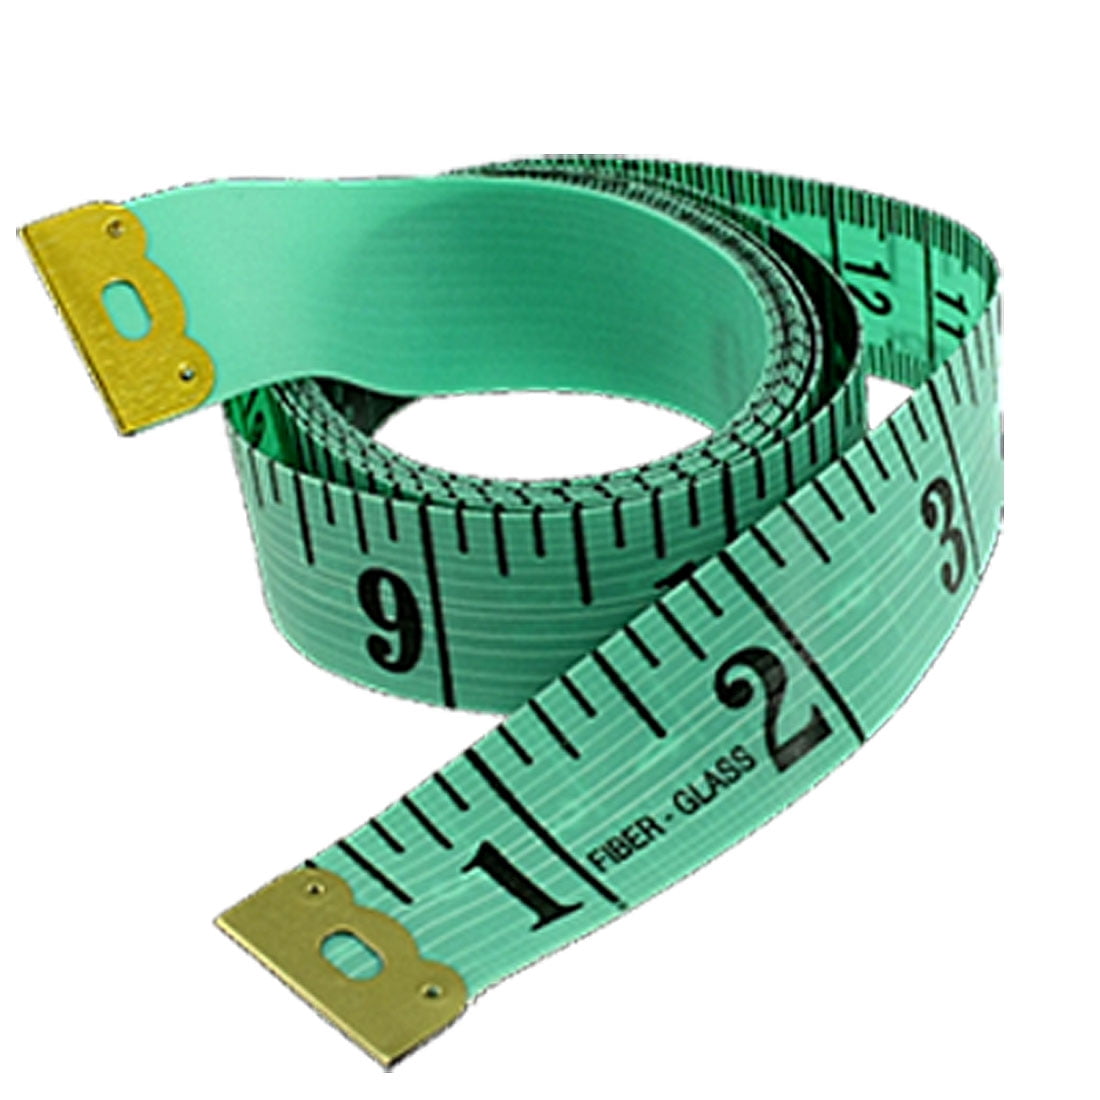 Hawkes tailor's tape measure (AP808032-01)